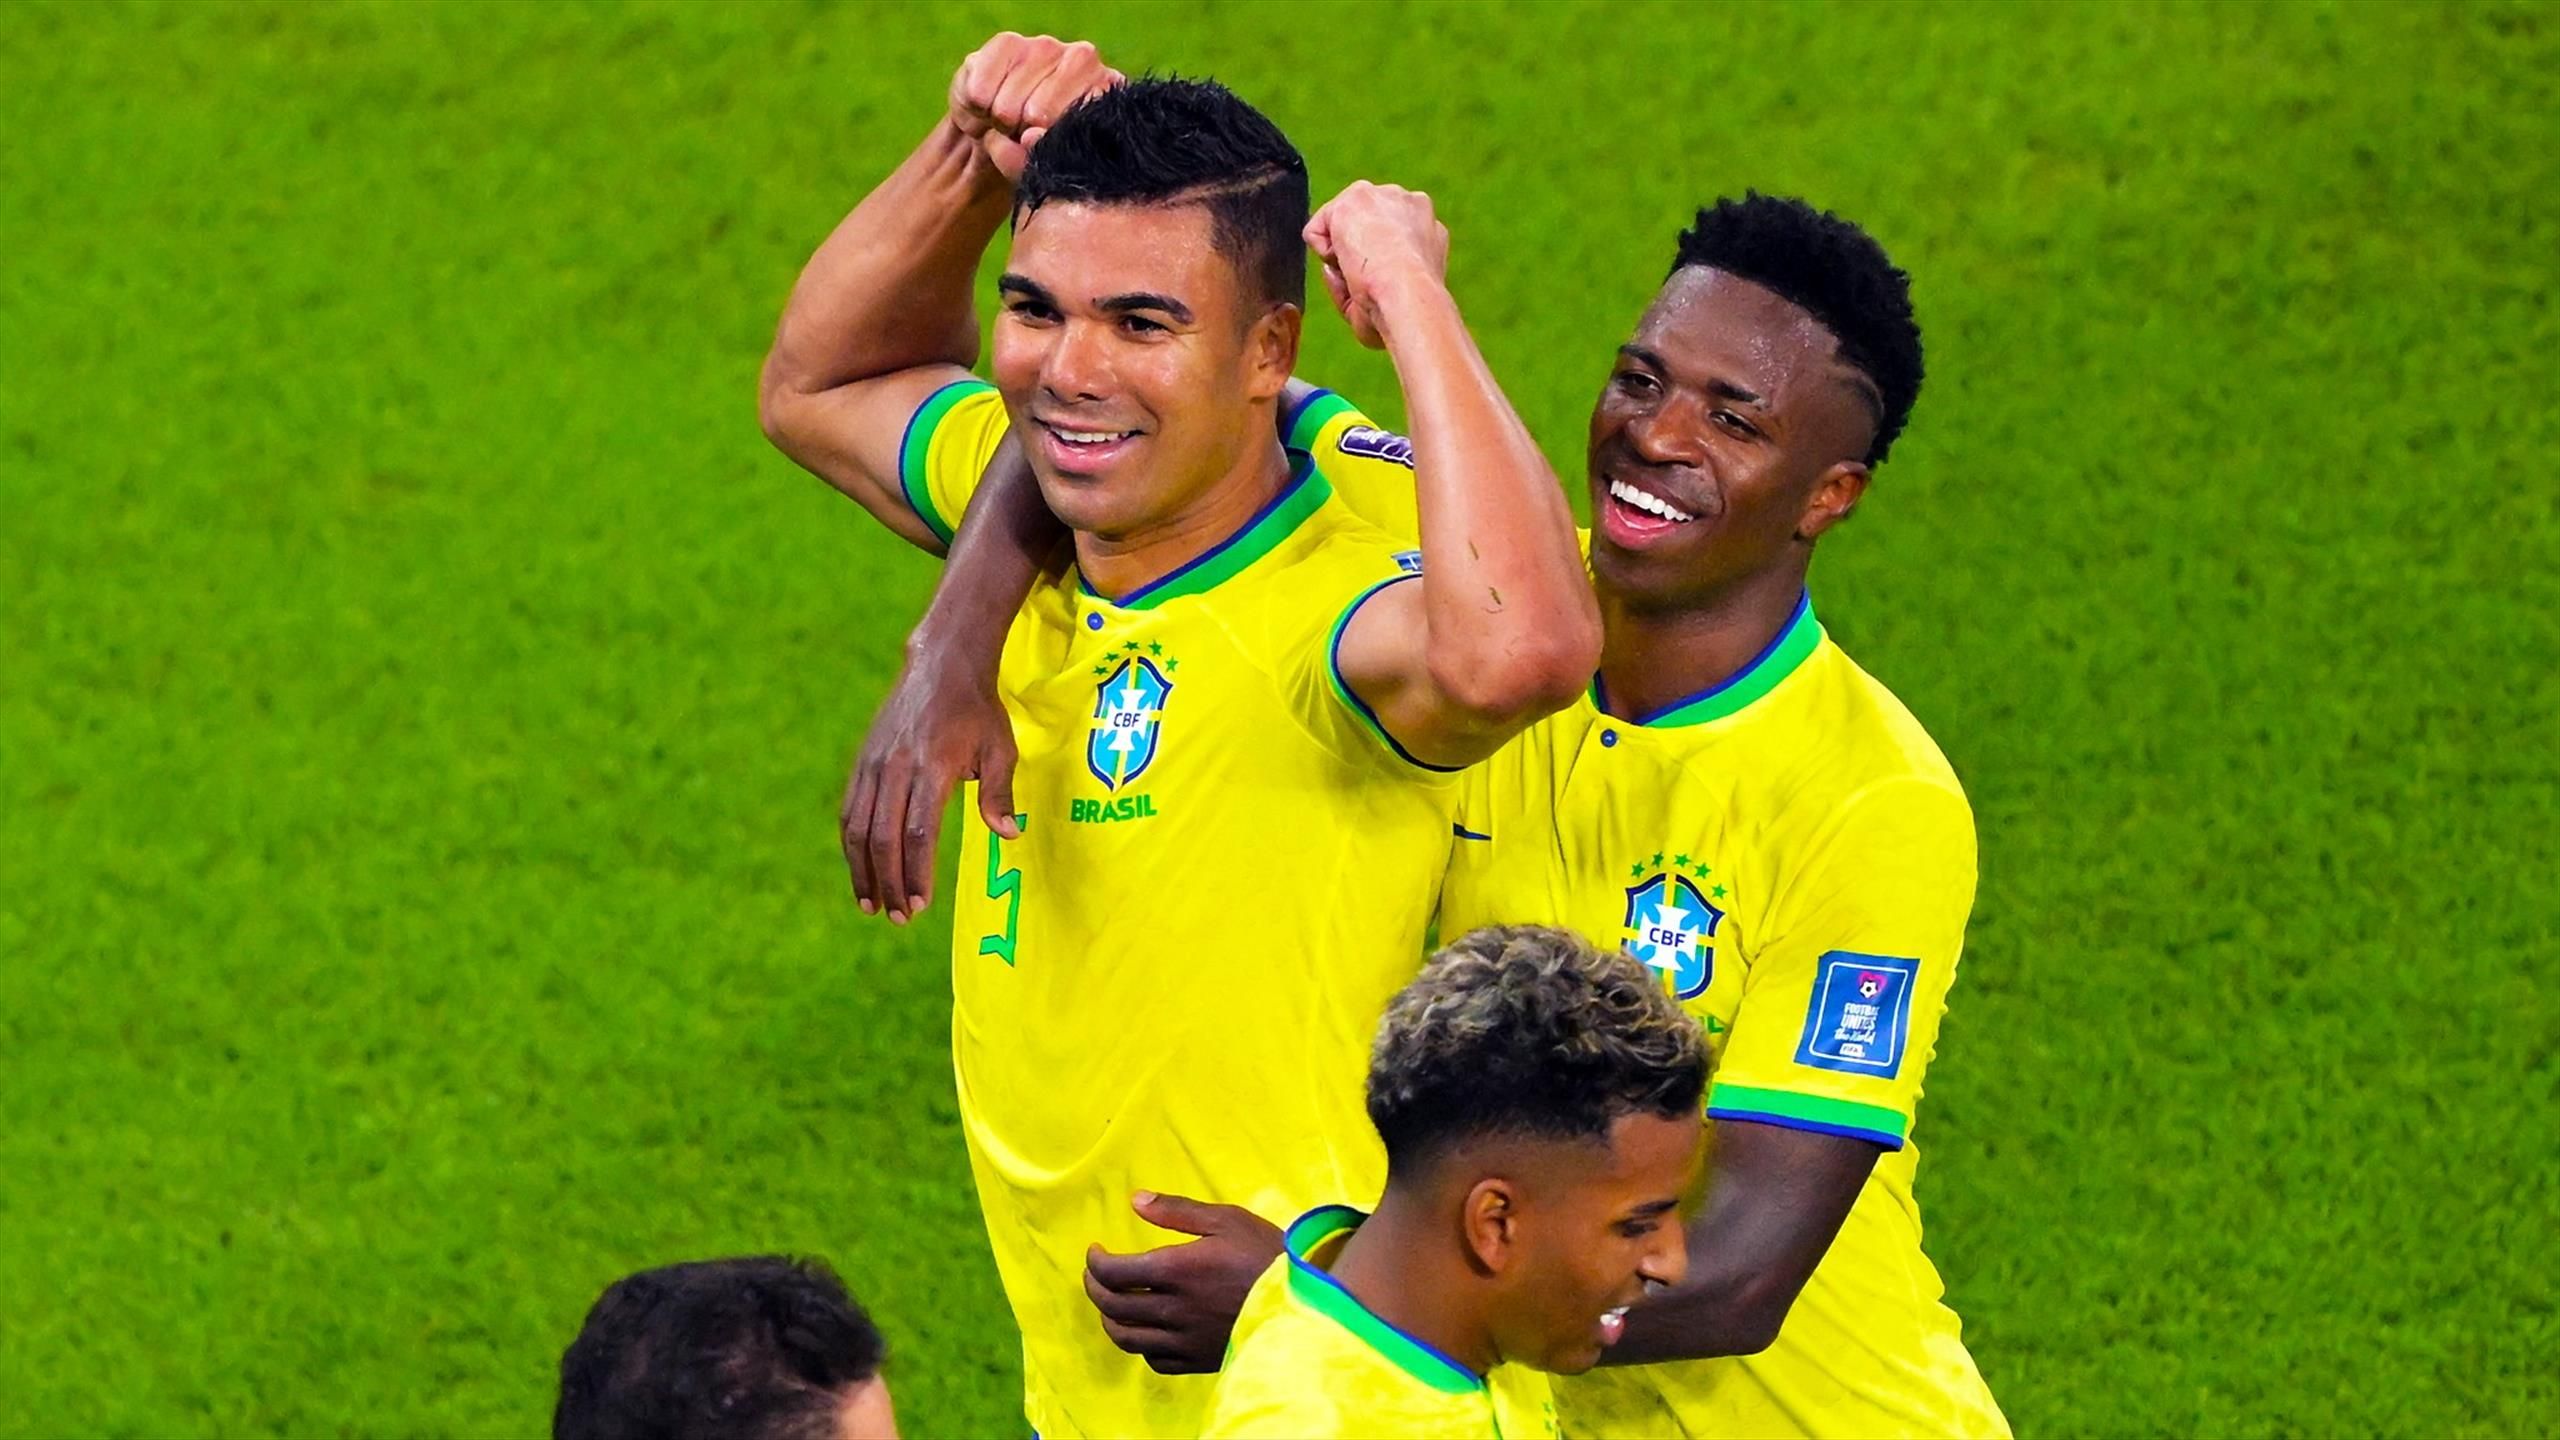 Brazil 1-0 Switzerland Casemiro strike sends Brazilians into World Cup last 16 in Qatar